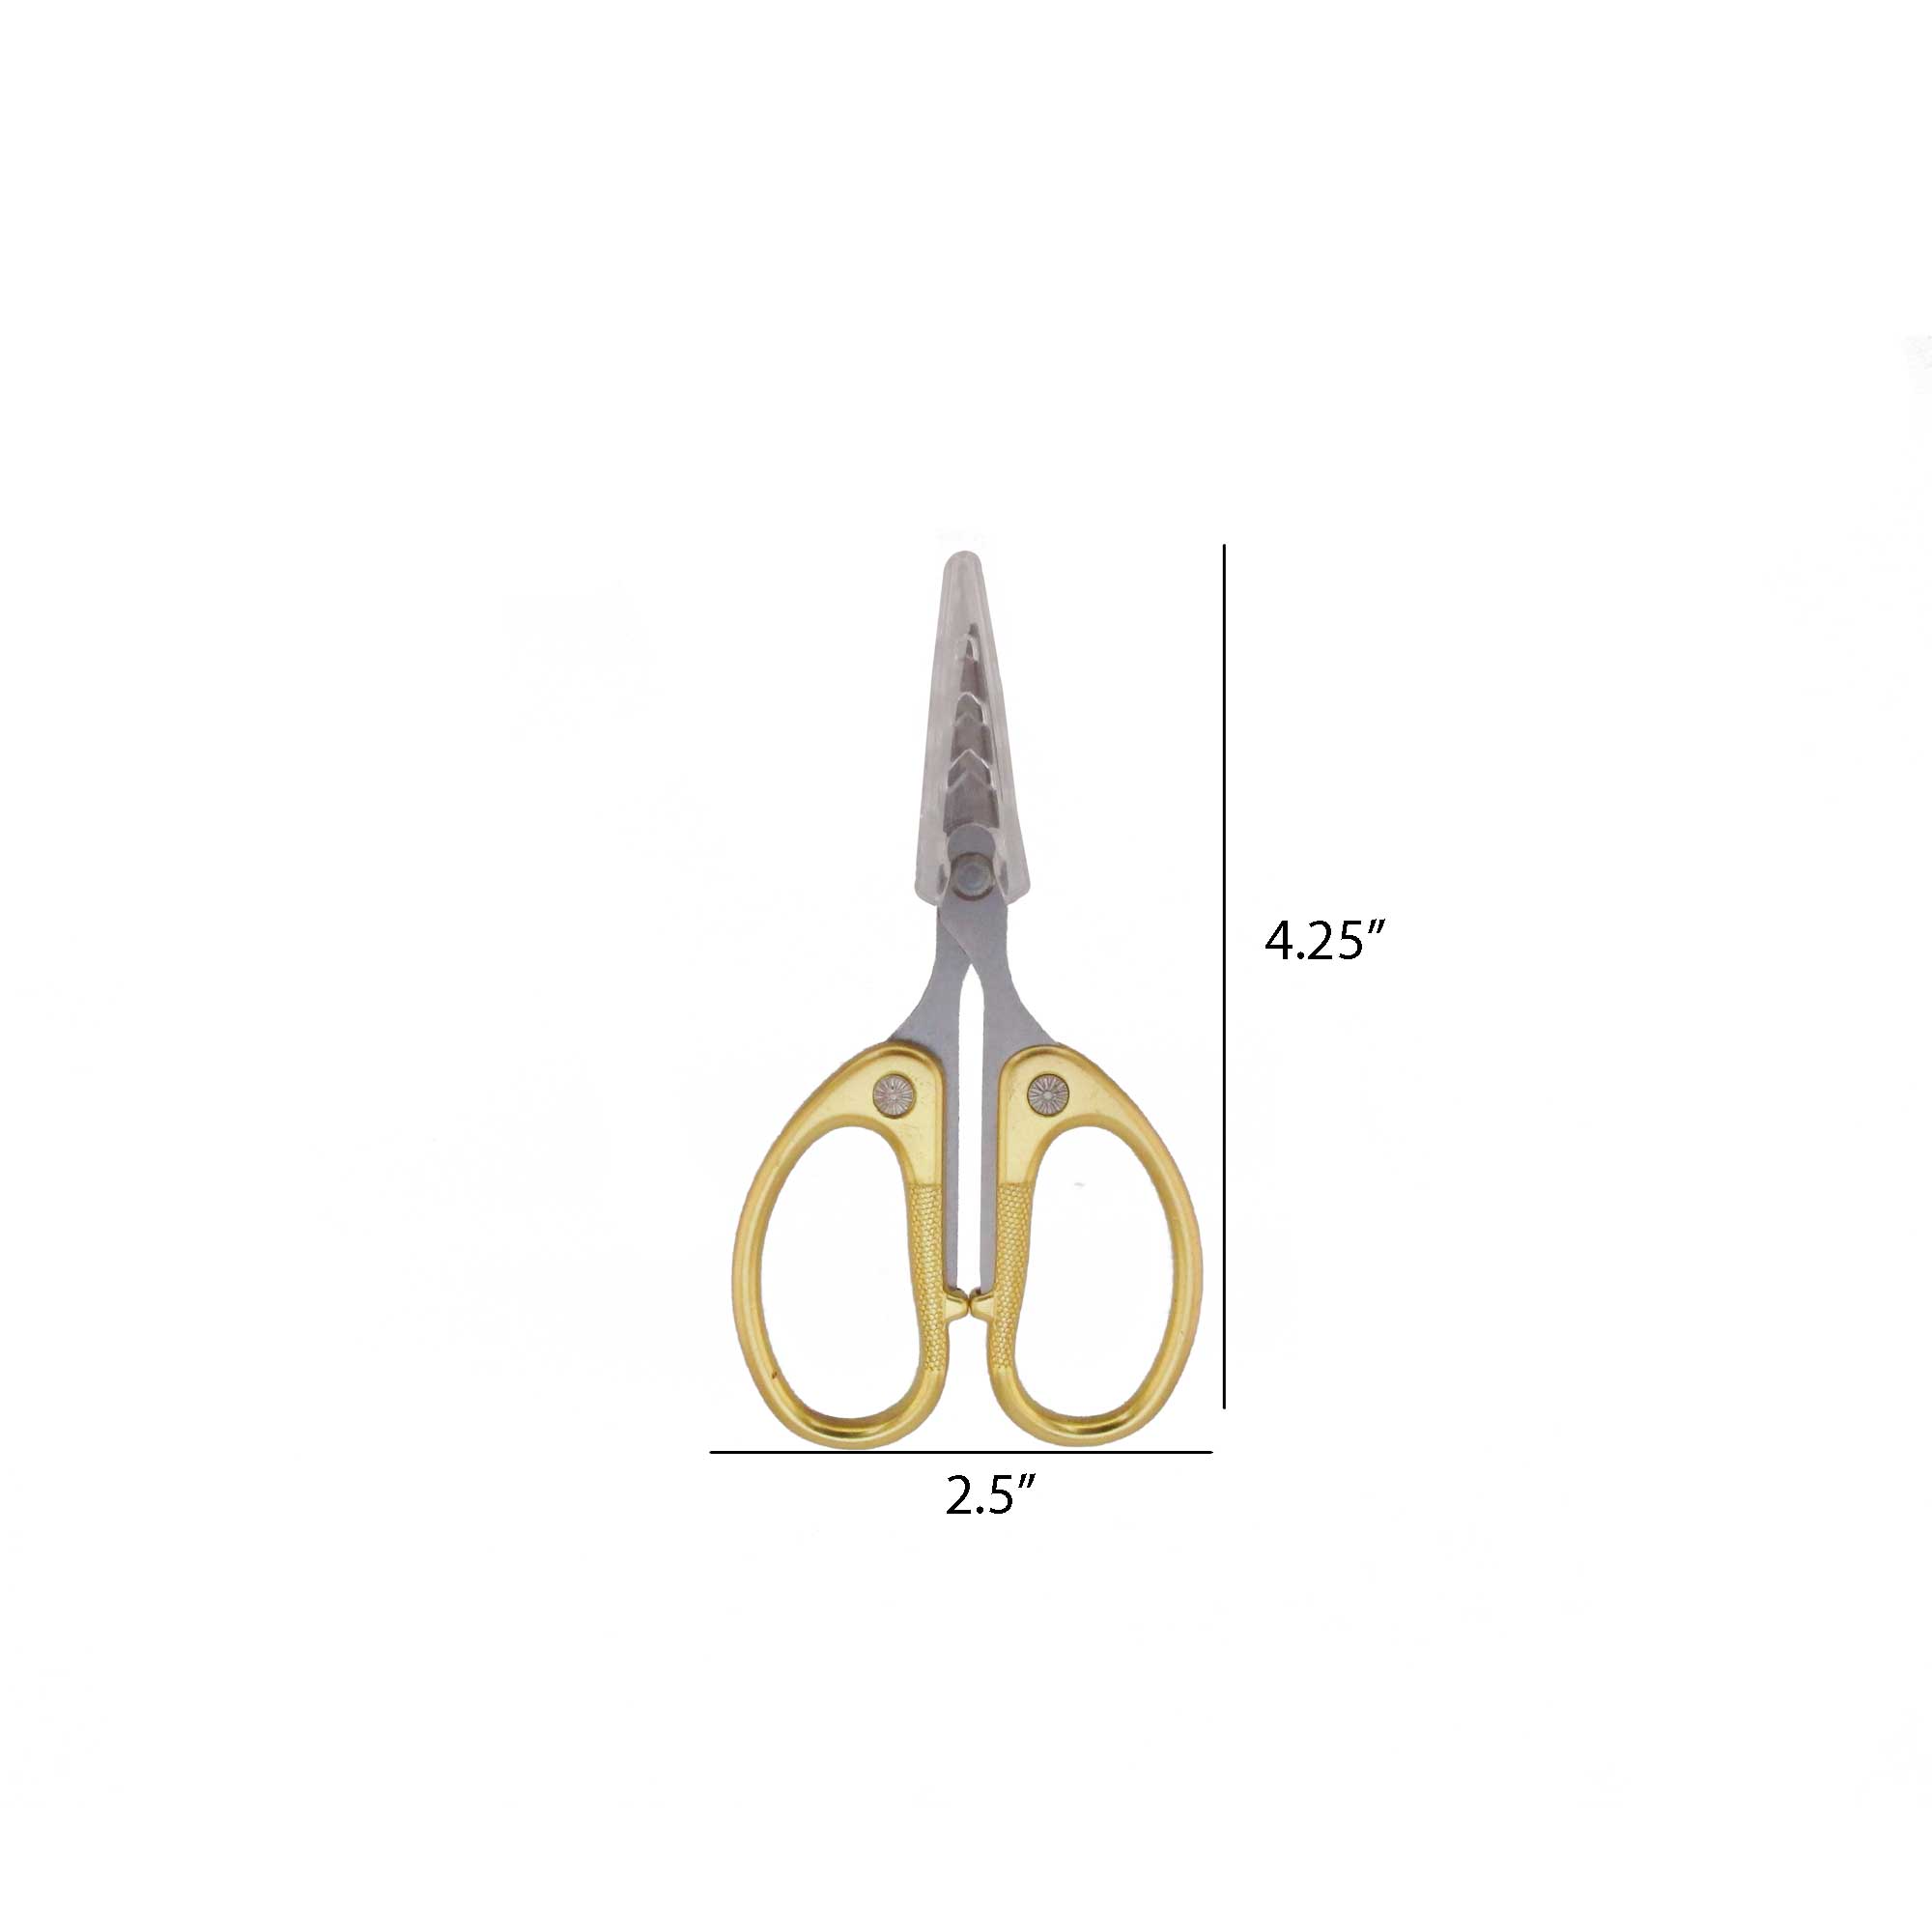 Embroidery Scissors - 4 1/2 Fine Cut Sharp Point Titanium Scissors w/ Sheath - JubileeYarn - Gold - 1 Pair